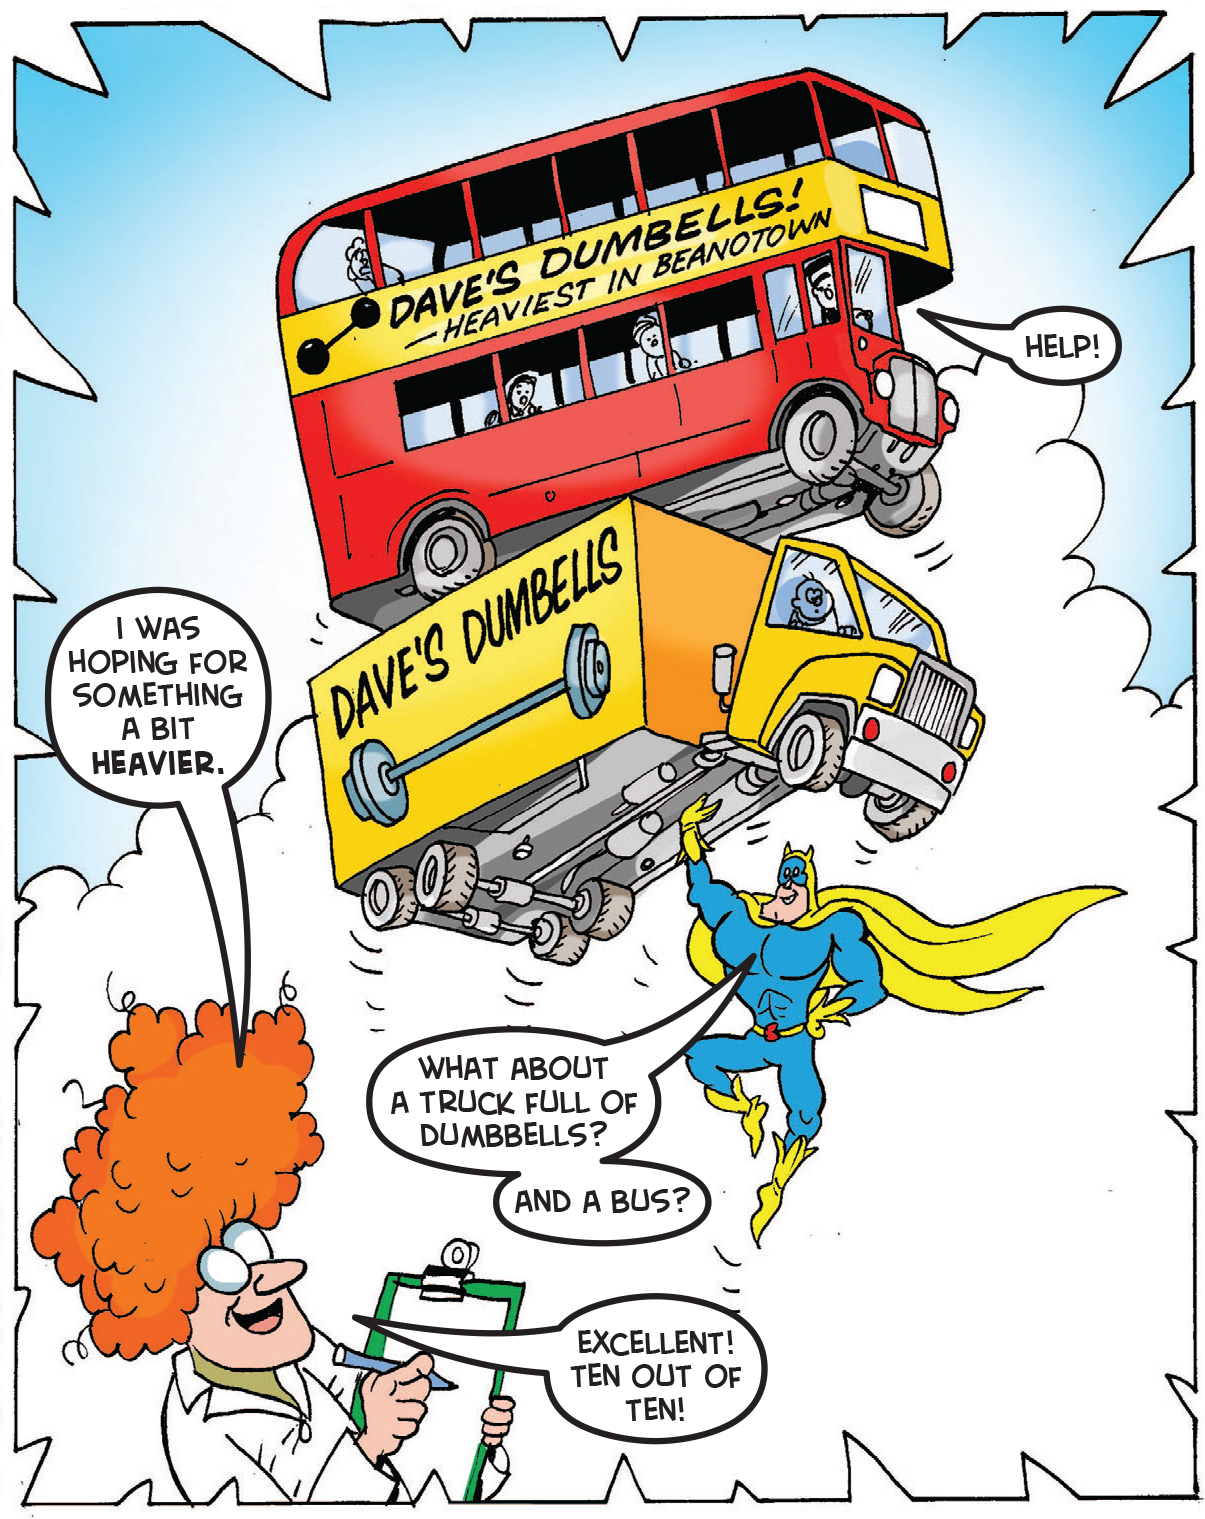 Bananaman lifts a truck and a bus